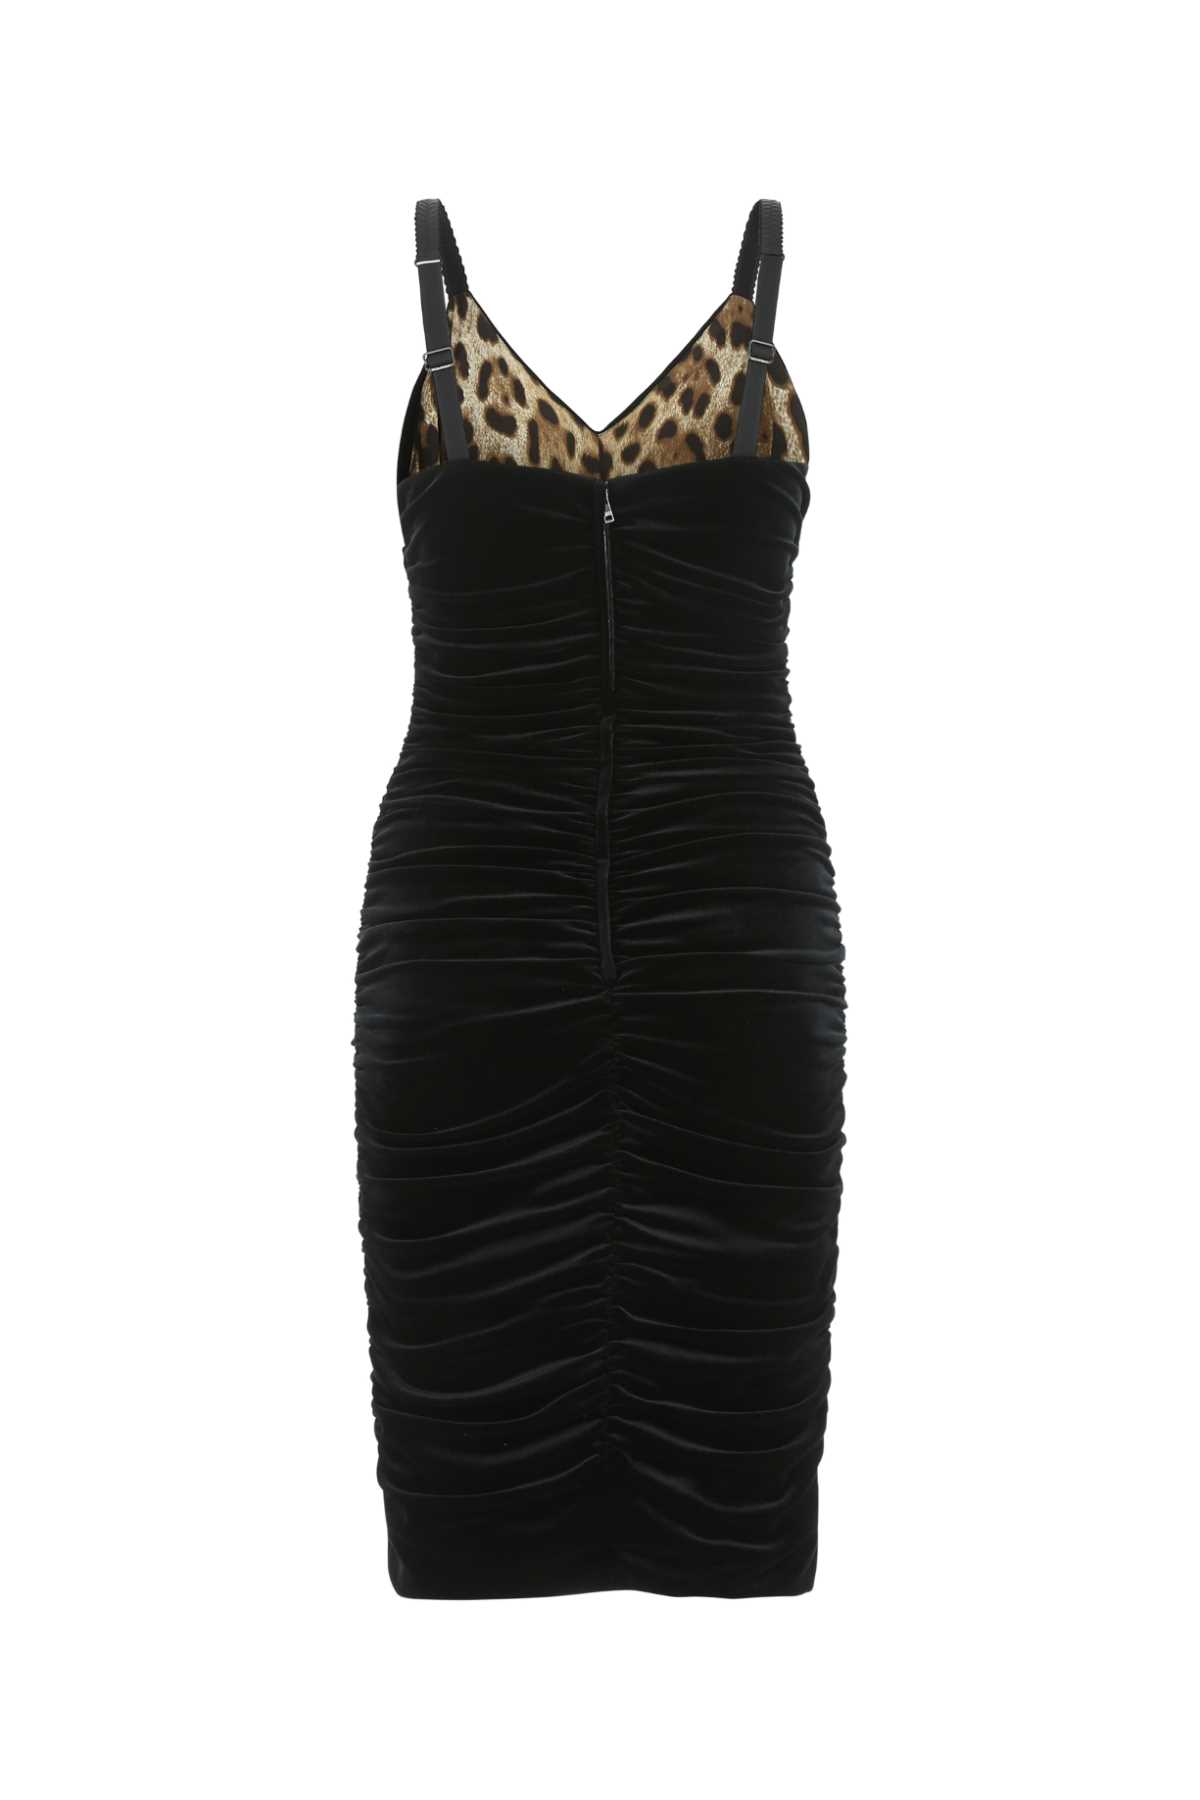 Dolce & Gabbana Black Velvet Mini Dress In N0000